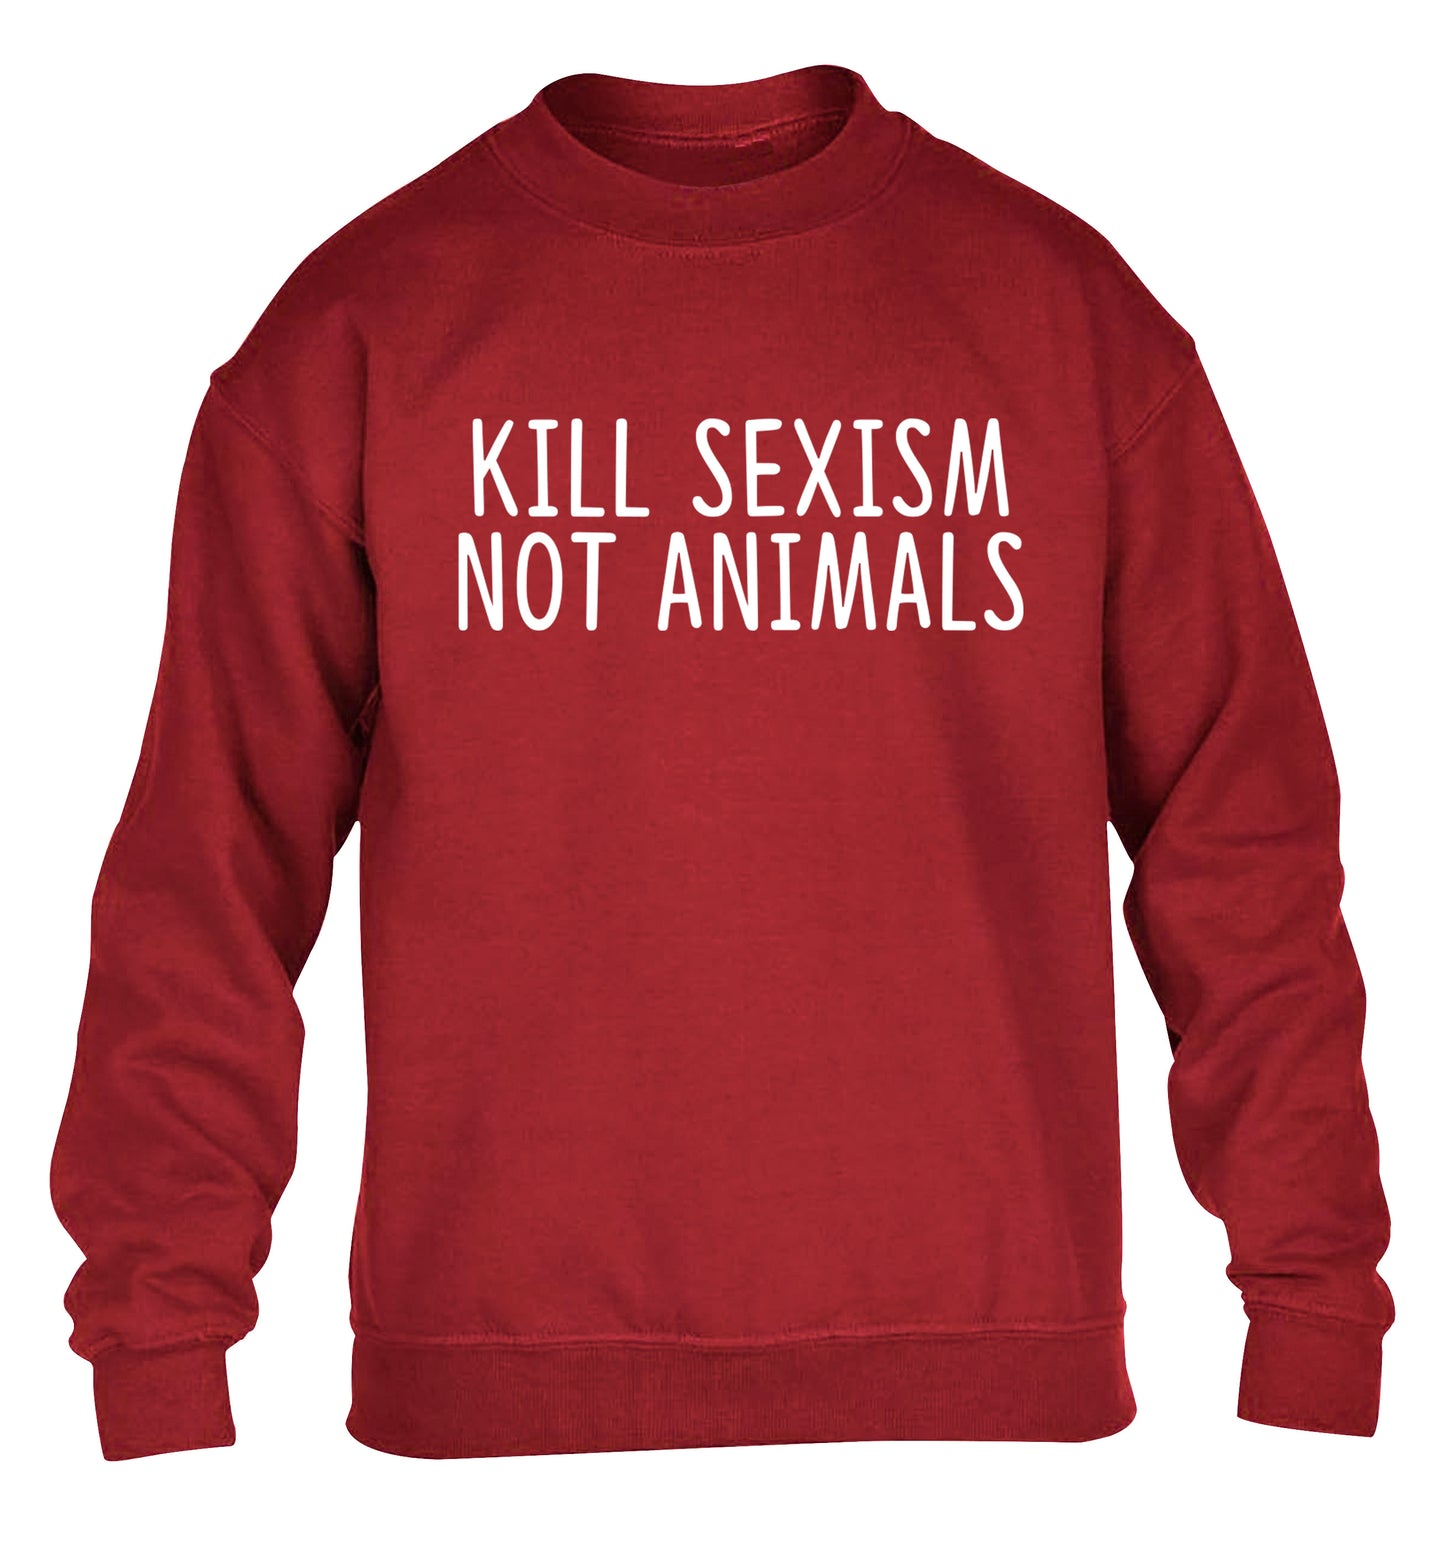 Kill Sexism Not Animals children's grey sweater 12-13 Years